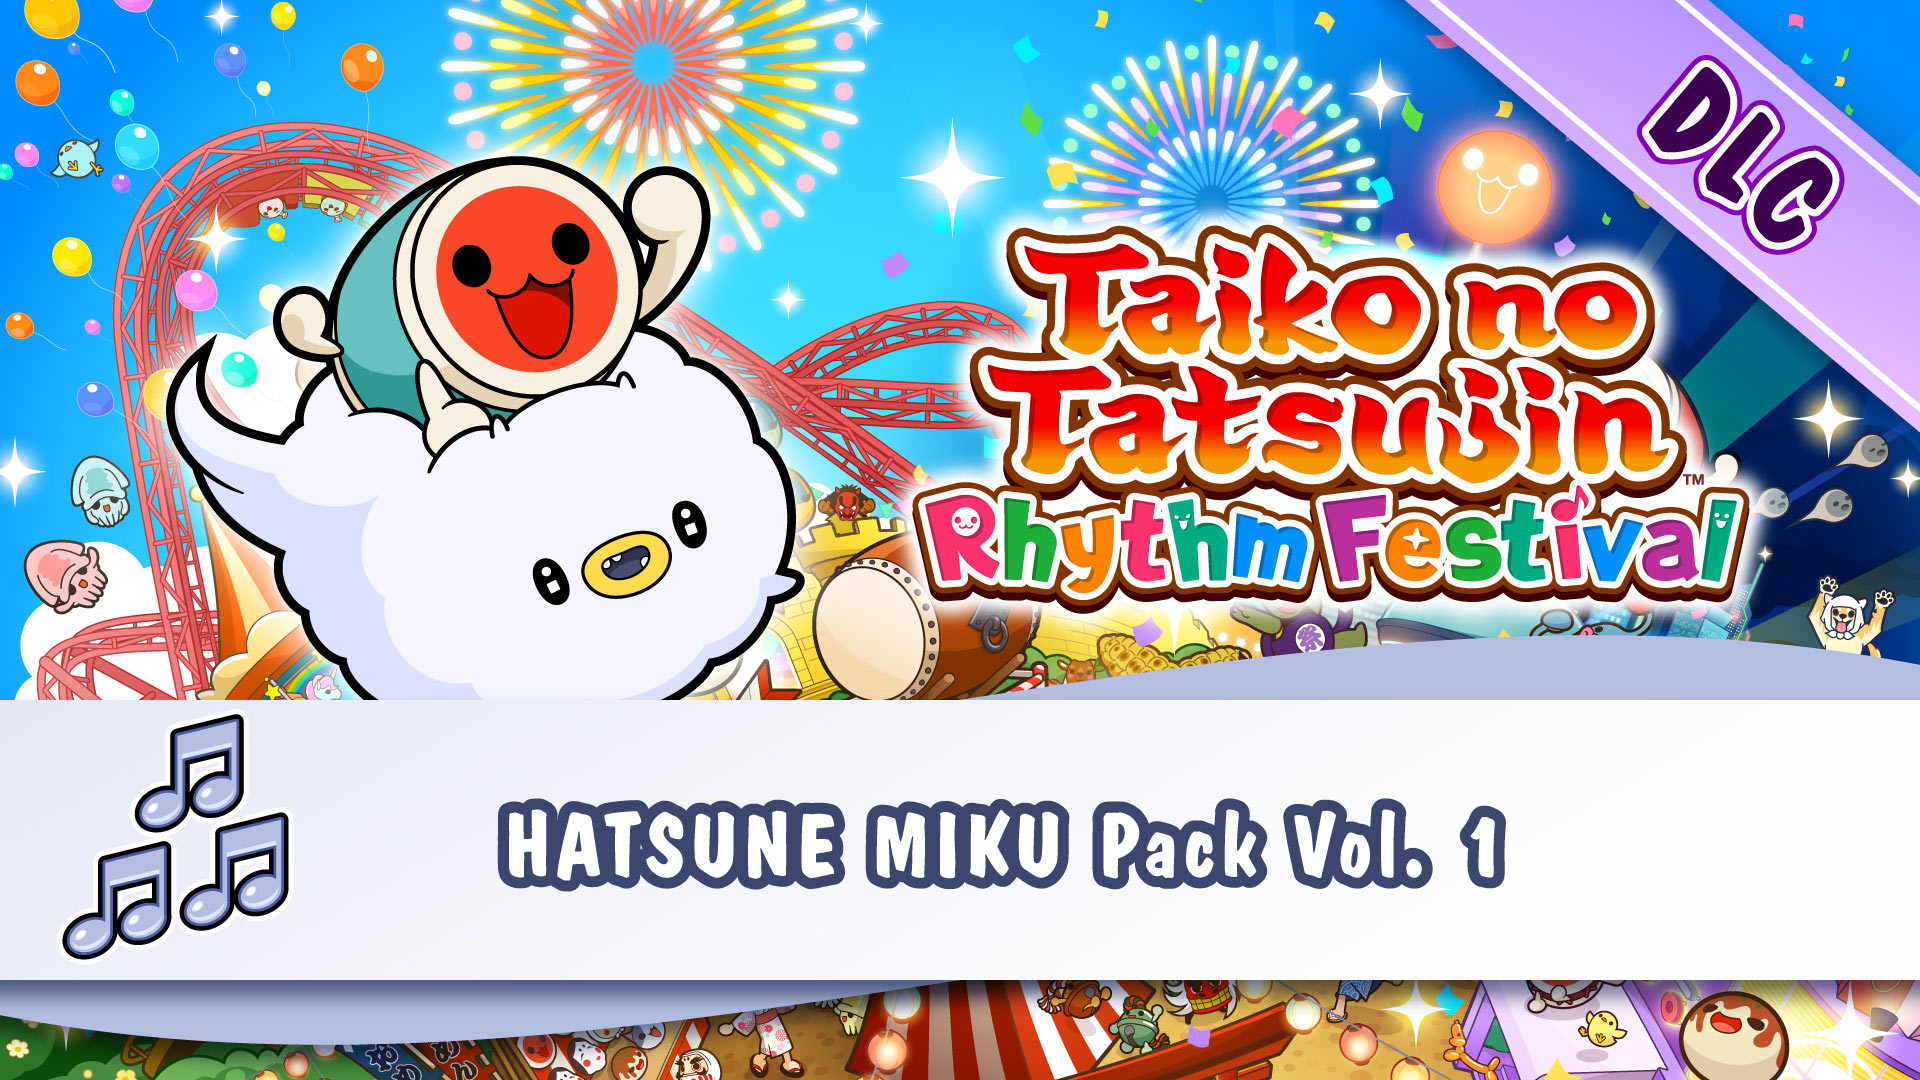 Taiko no Tatsujin: Rhythm Festival HATSUNE MIKU Pack Vol. 1